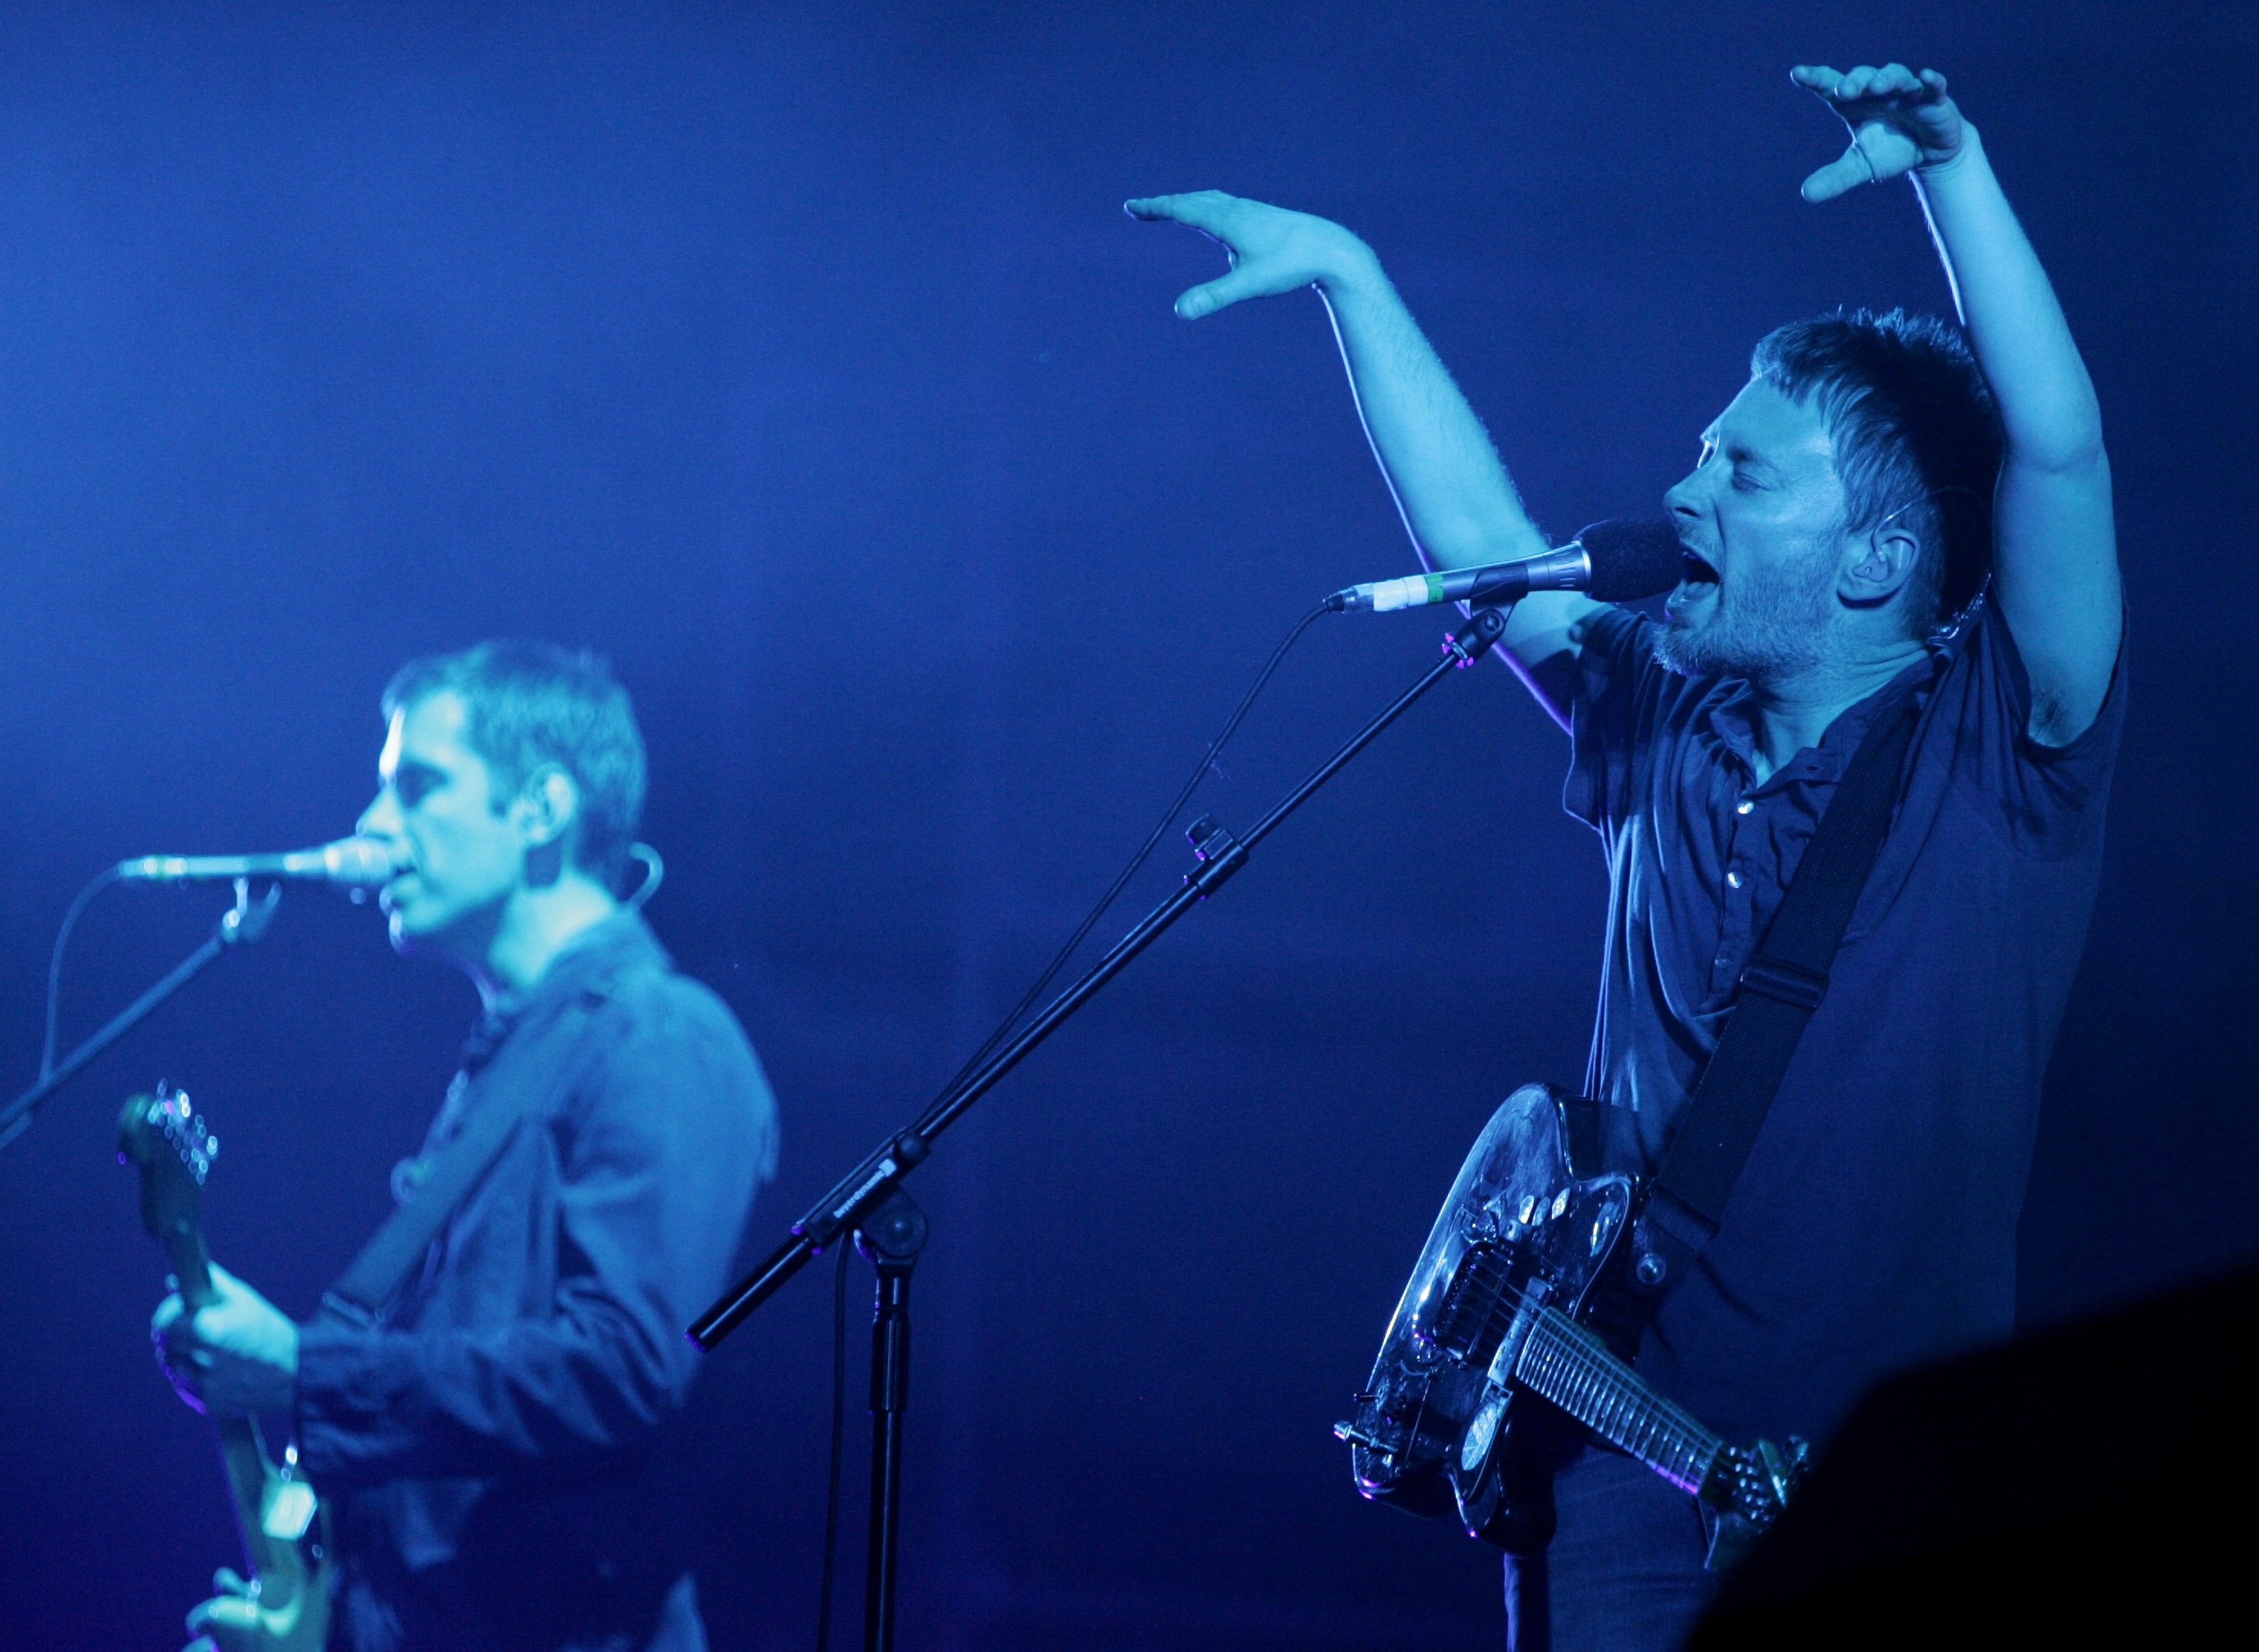 Radiohead's Thom Yorke & Ed O'Brien on stage